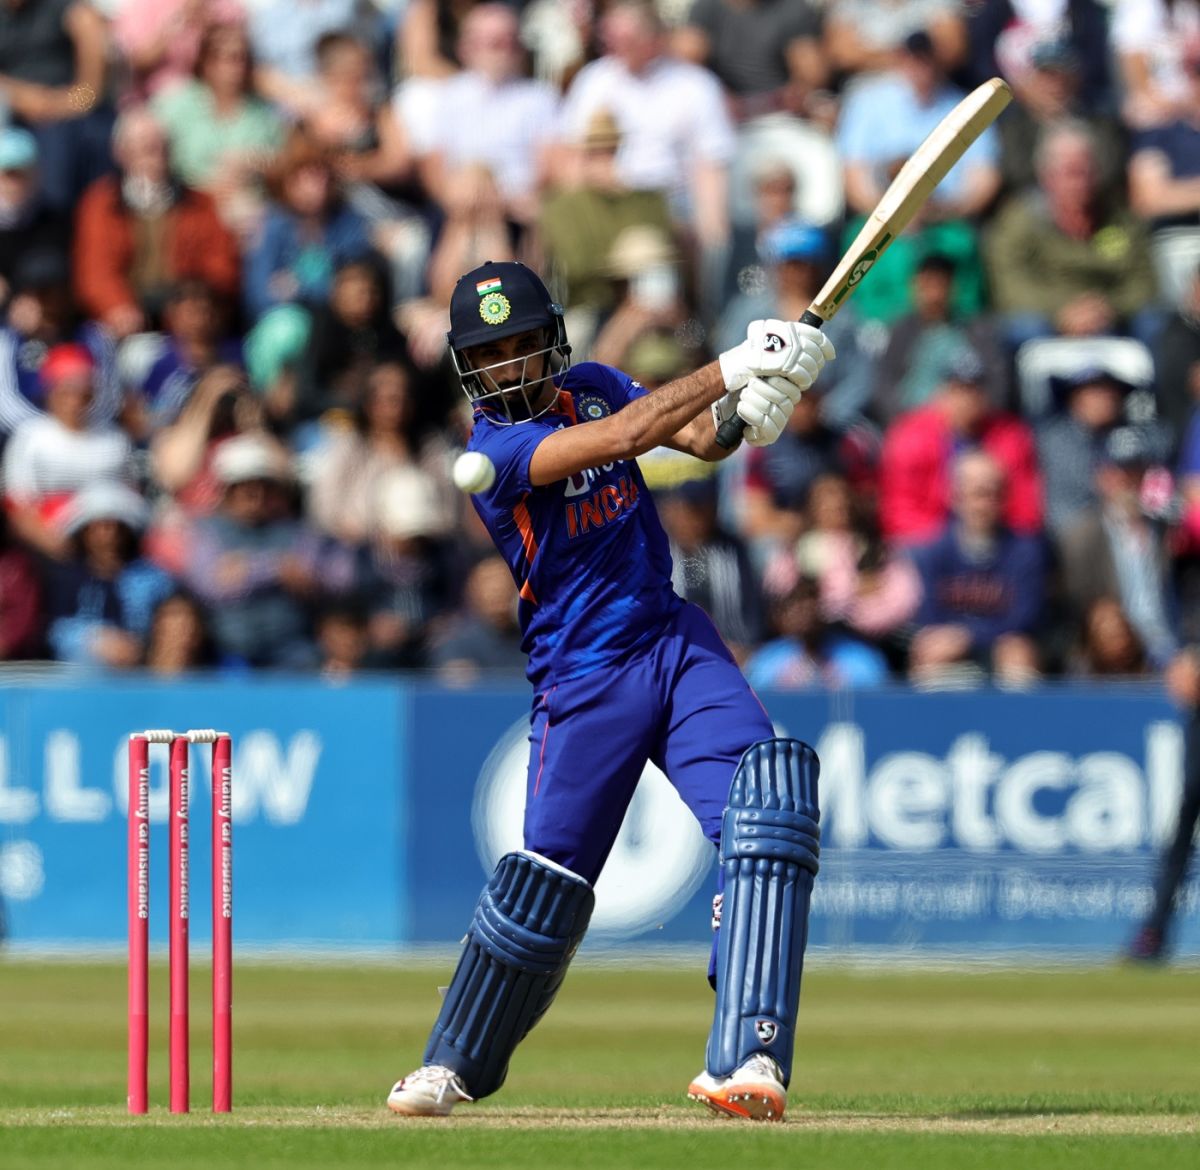 Harshal Patel slaps one away, Northamptonshire vs Indians, T20 tour game, Northampton, July 3, 2022